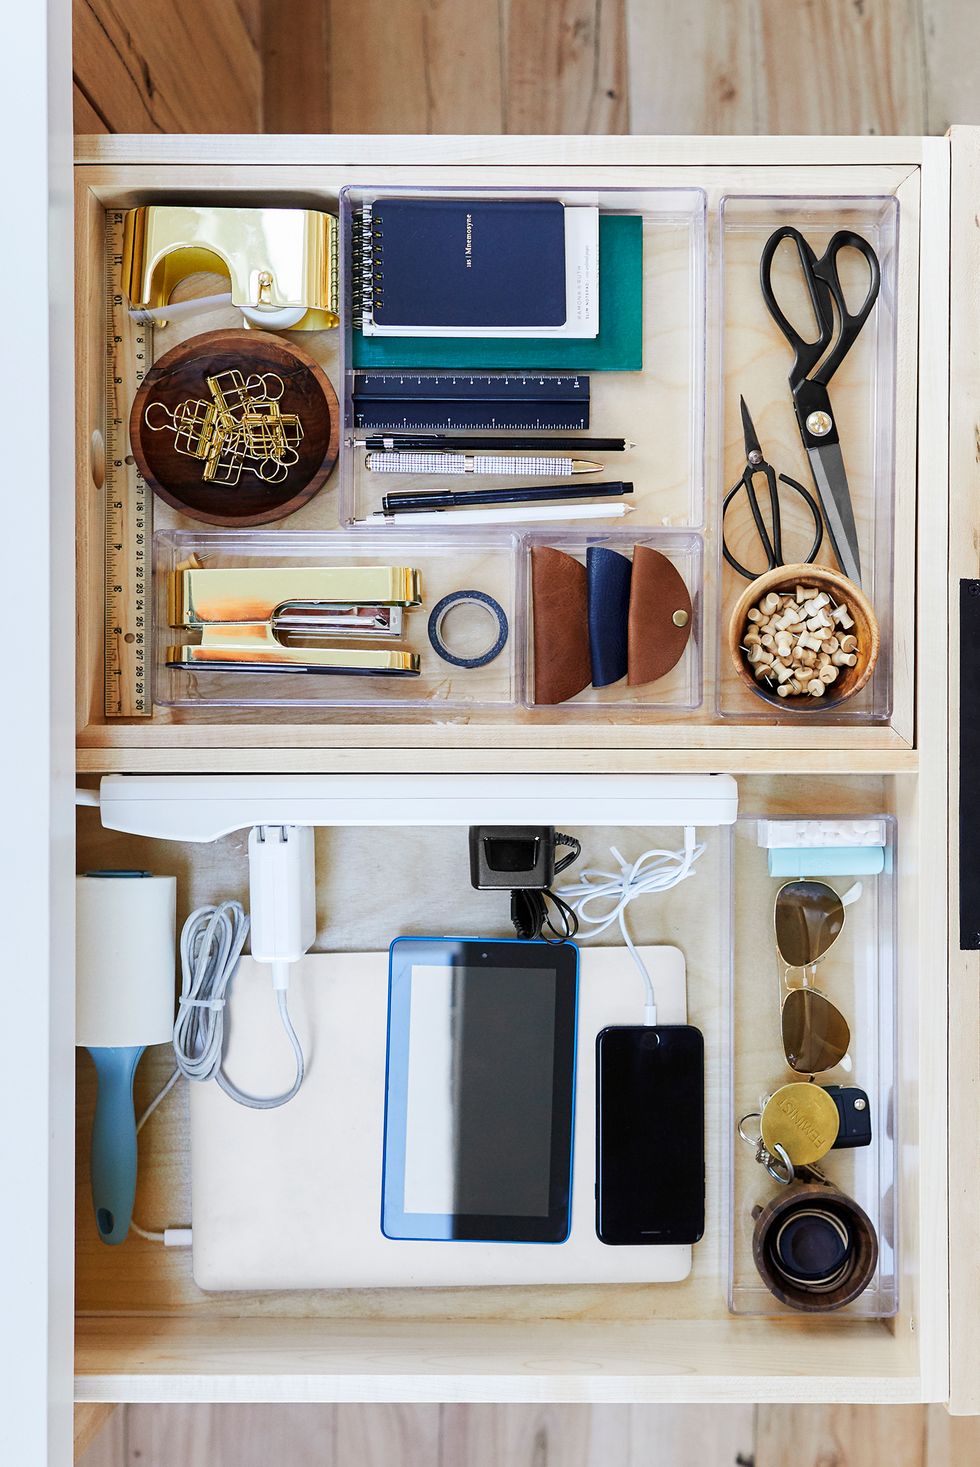 20 Smart Box Shelf Ideas That Will Upgrade Your Room's Organization